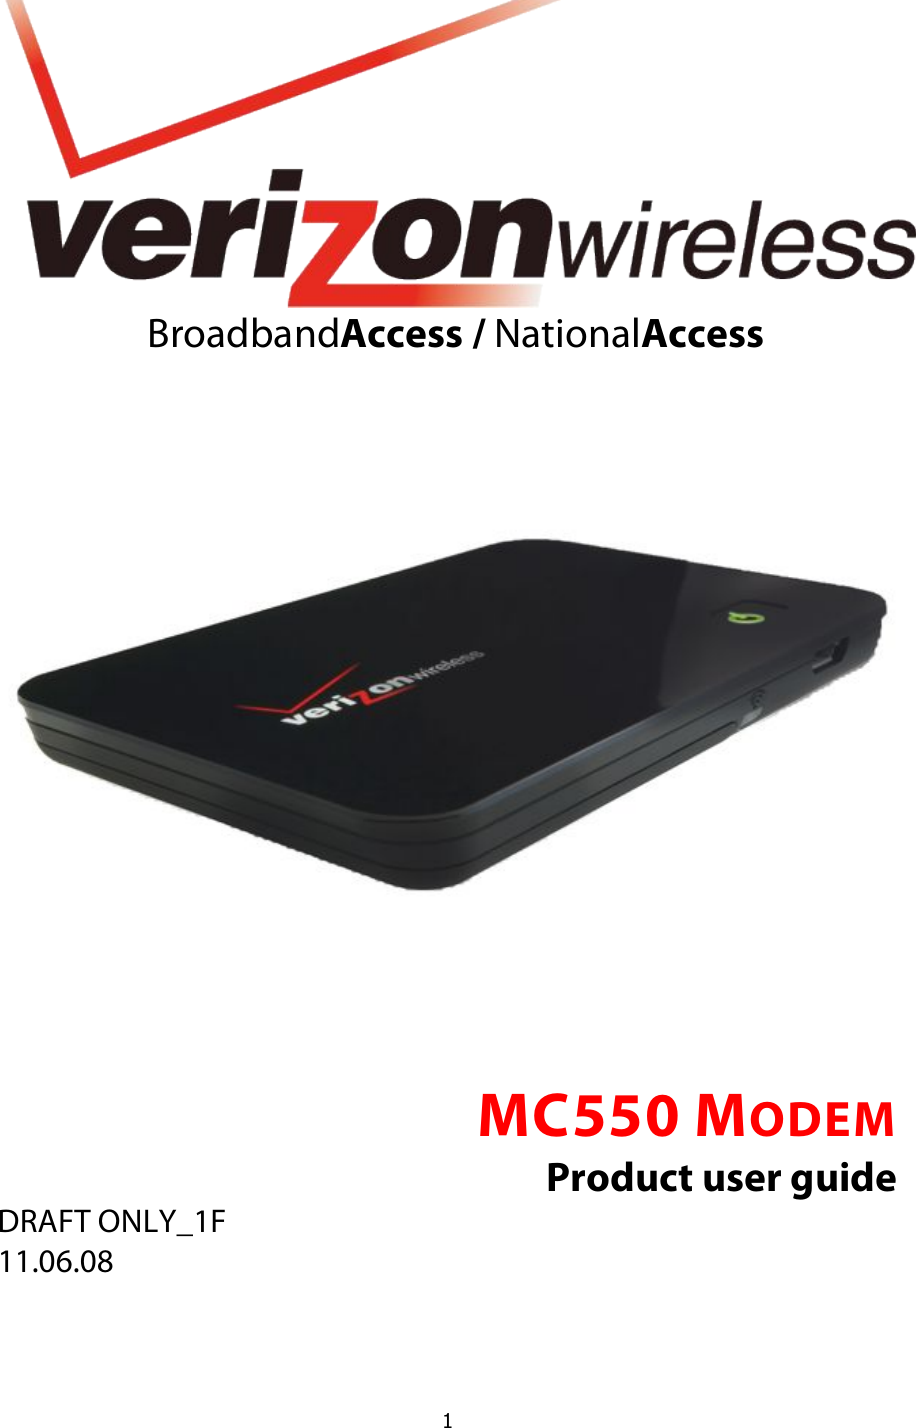  1   BroadbandAccess / NationalAccess       !!!MC550 MODEM  Product user guide DRAFT ONLY_1F 11.06.08  